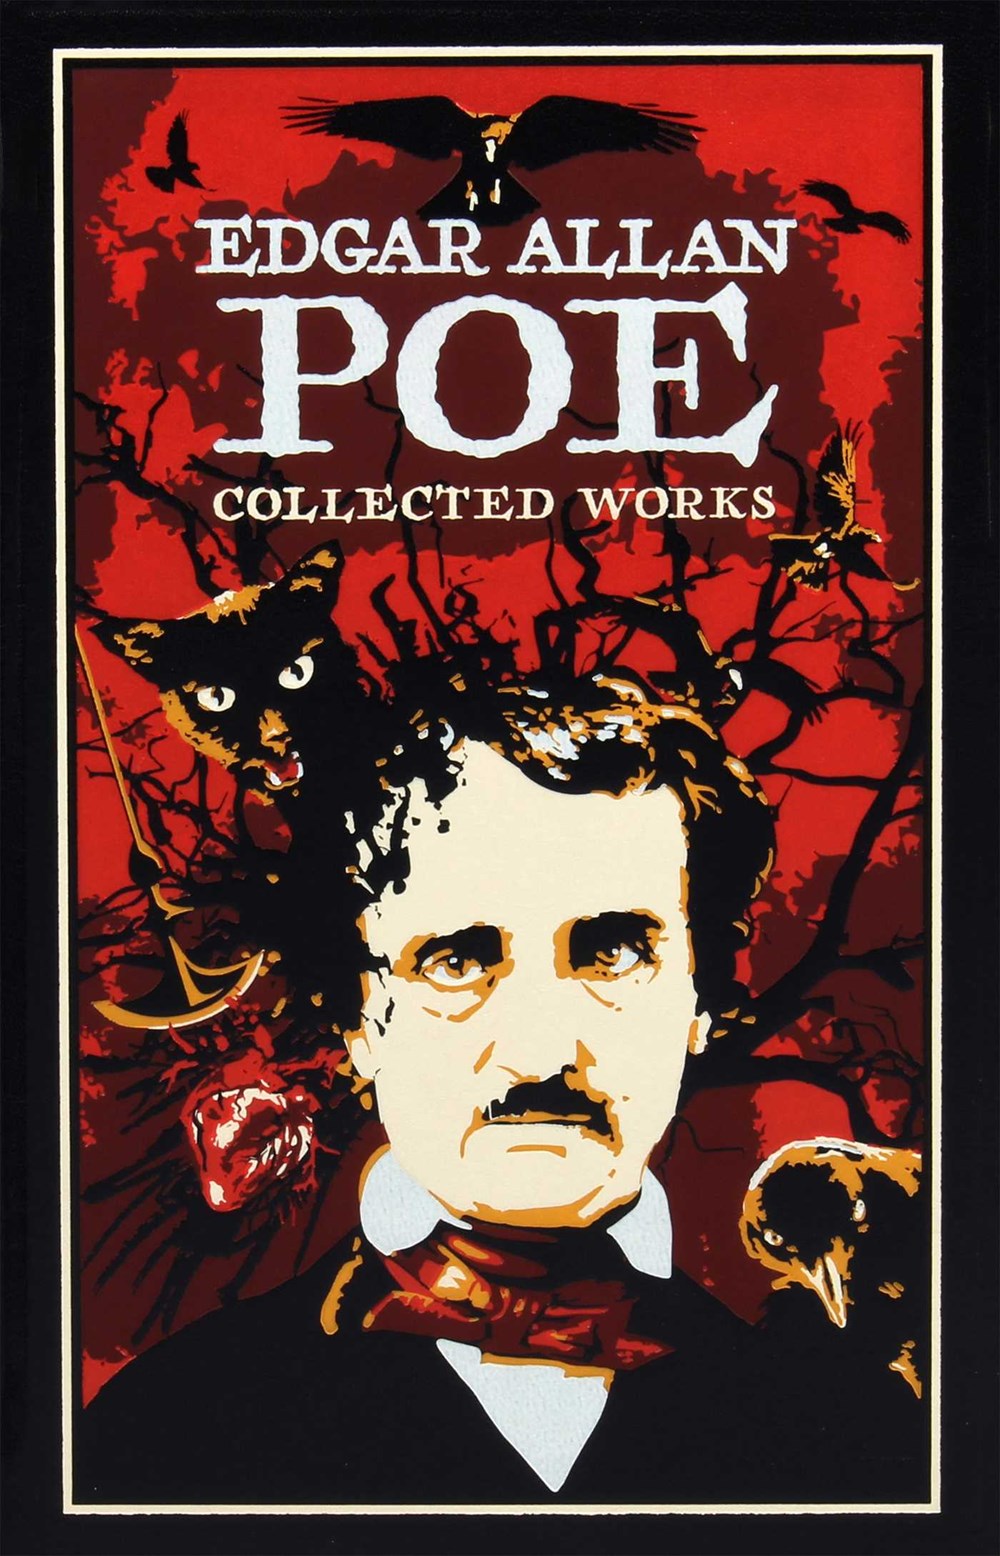 Edgar Allan Poe: Stories & Poems